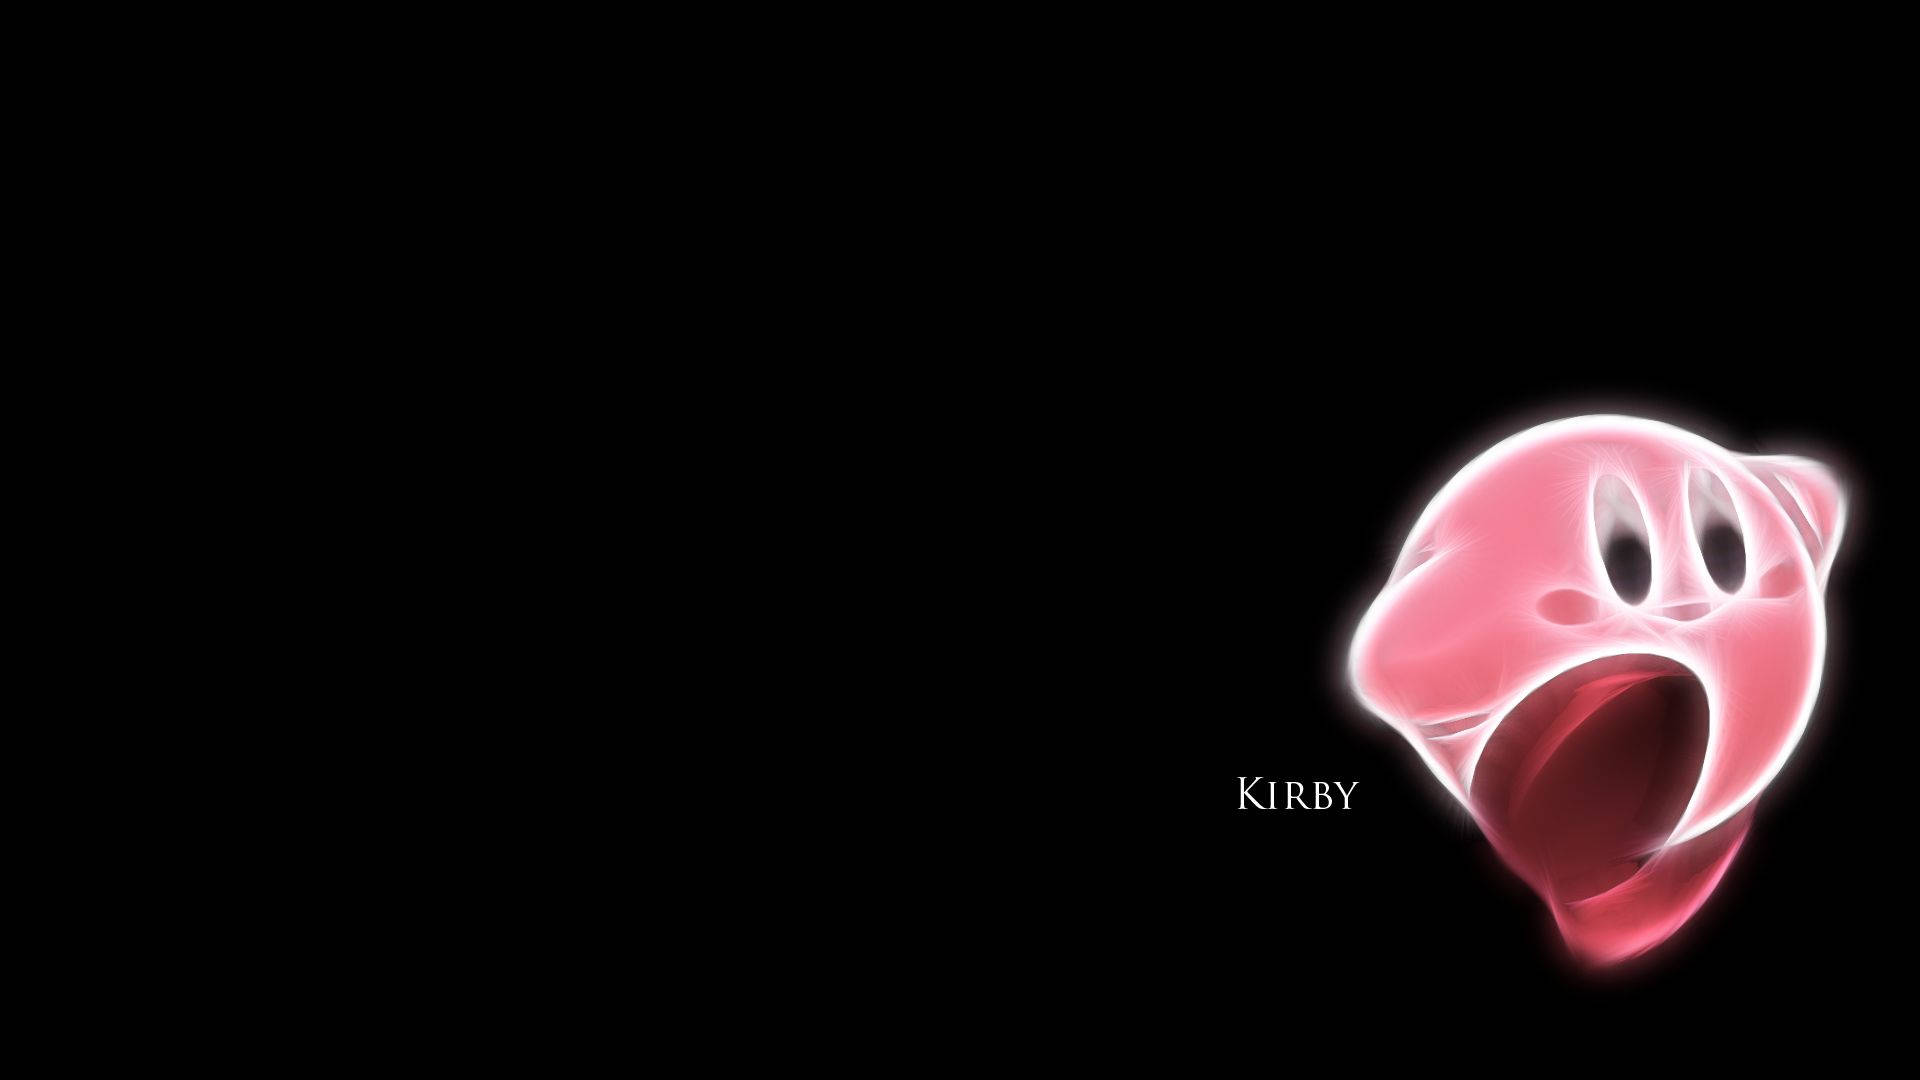 Enjoy the magical world of Kirby through neon pink lights Wallpaper